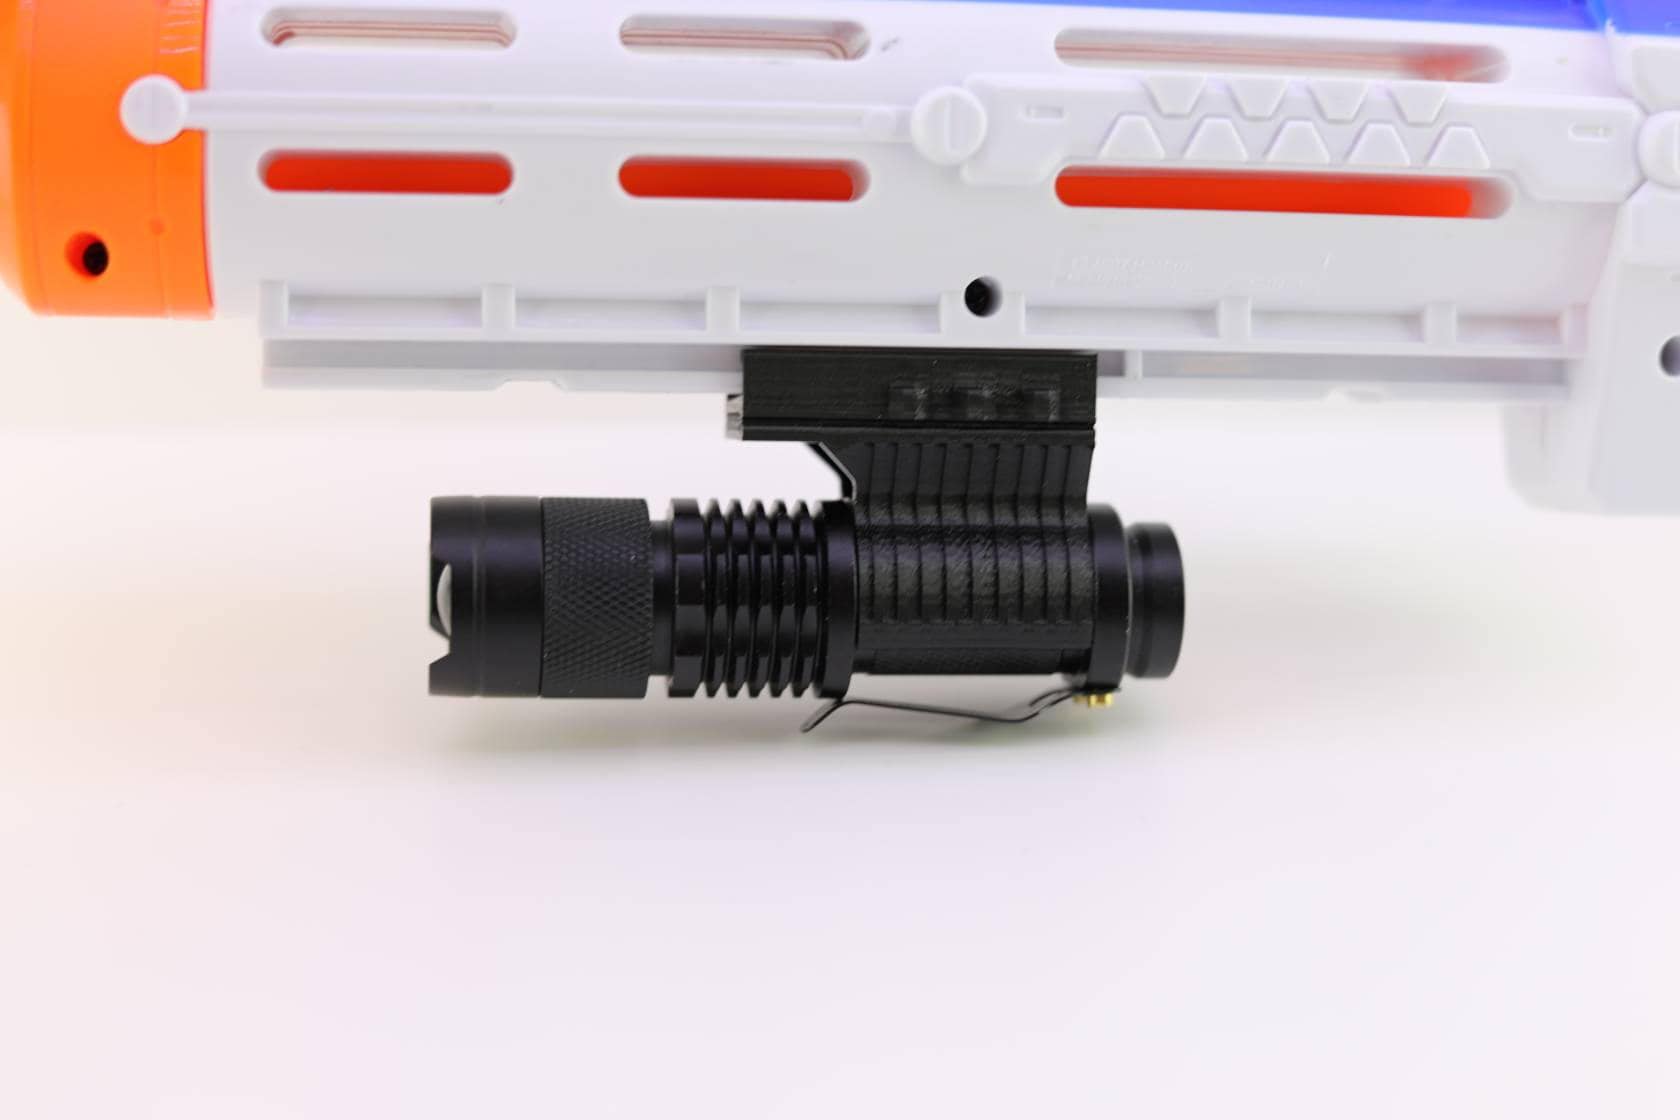 Løfte moronic smog Tactical Flash Light for Nerf Blasters. LED Adjustable Focus - Etsy